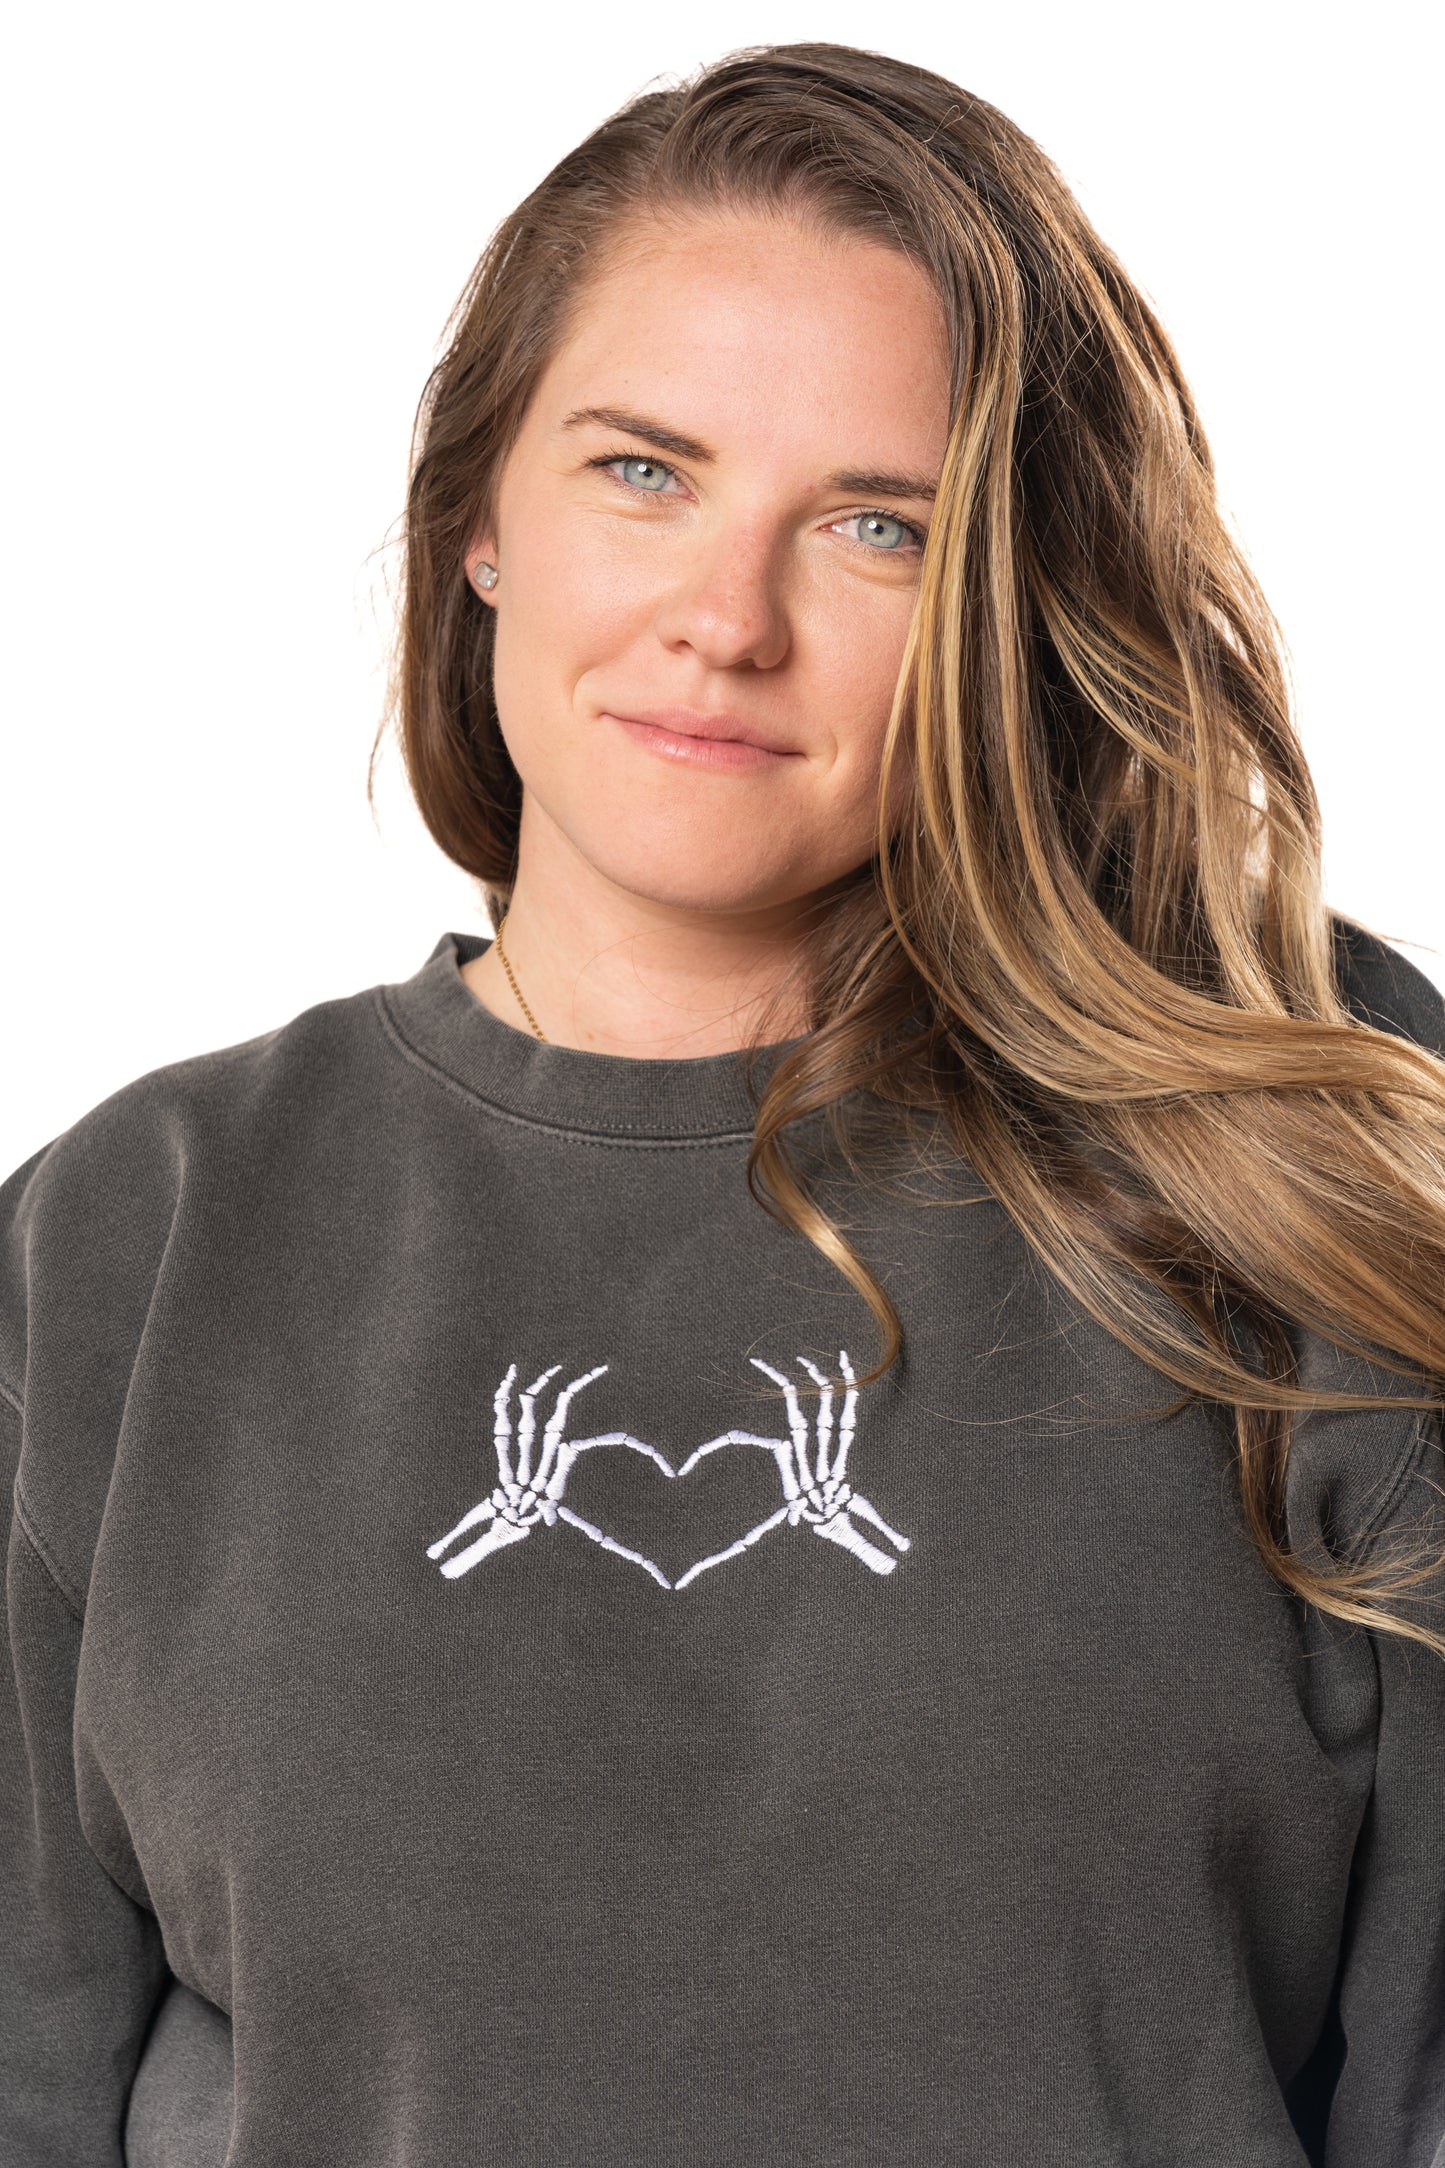 Skeleton Heart Hands - Embroidered Sweatshirt (Charcoal)